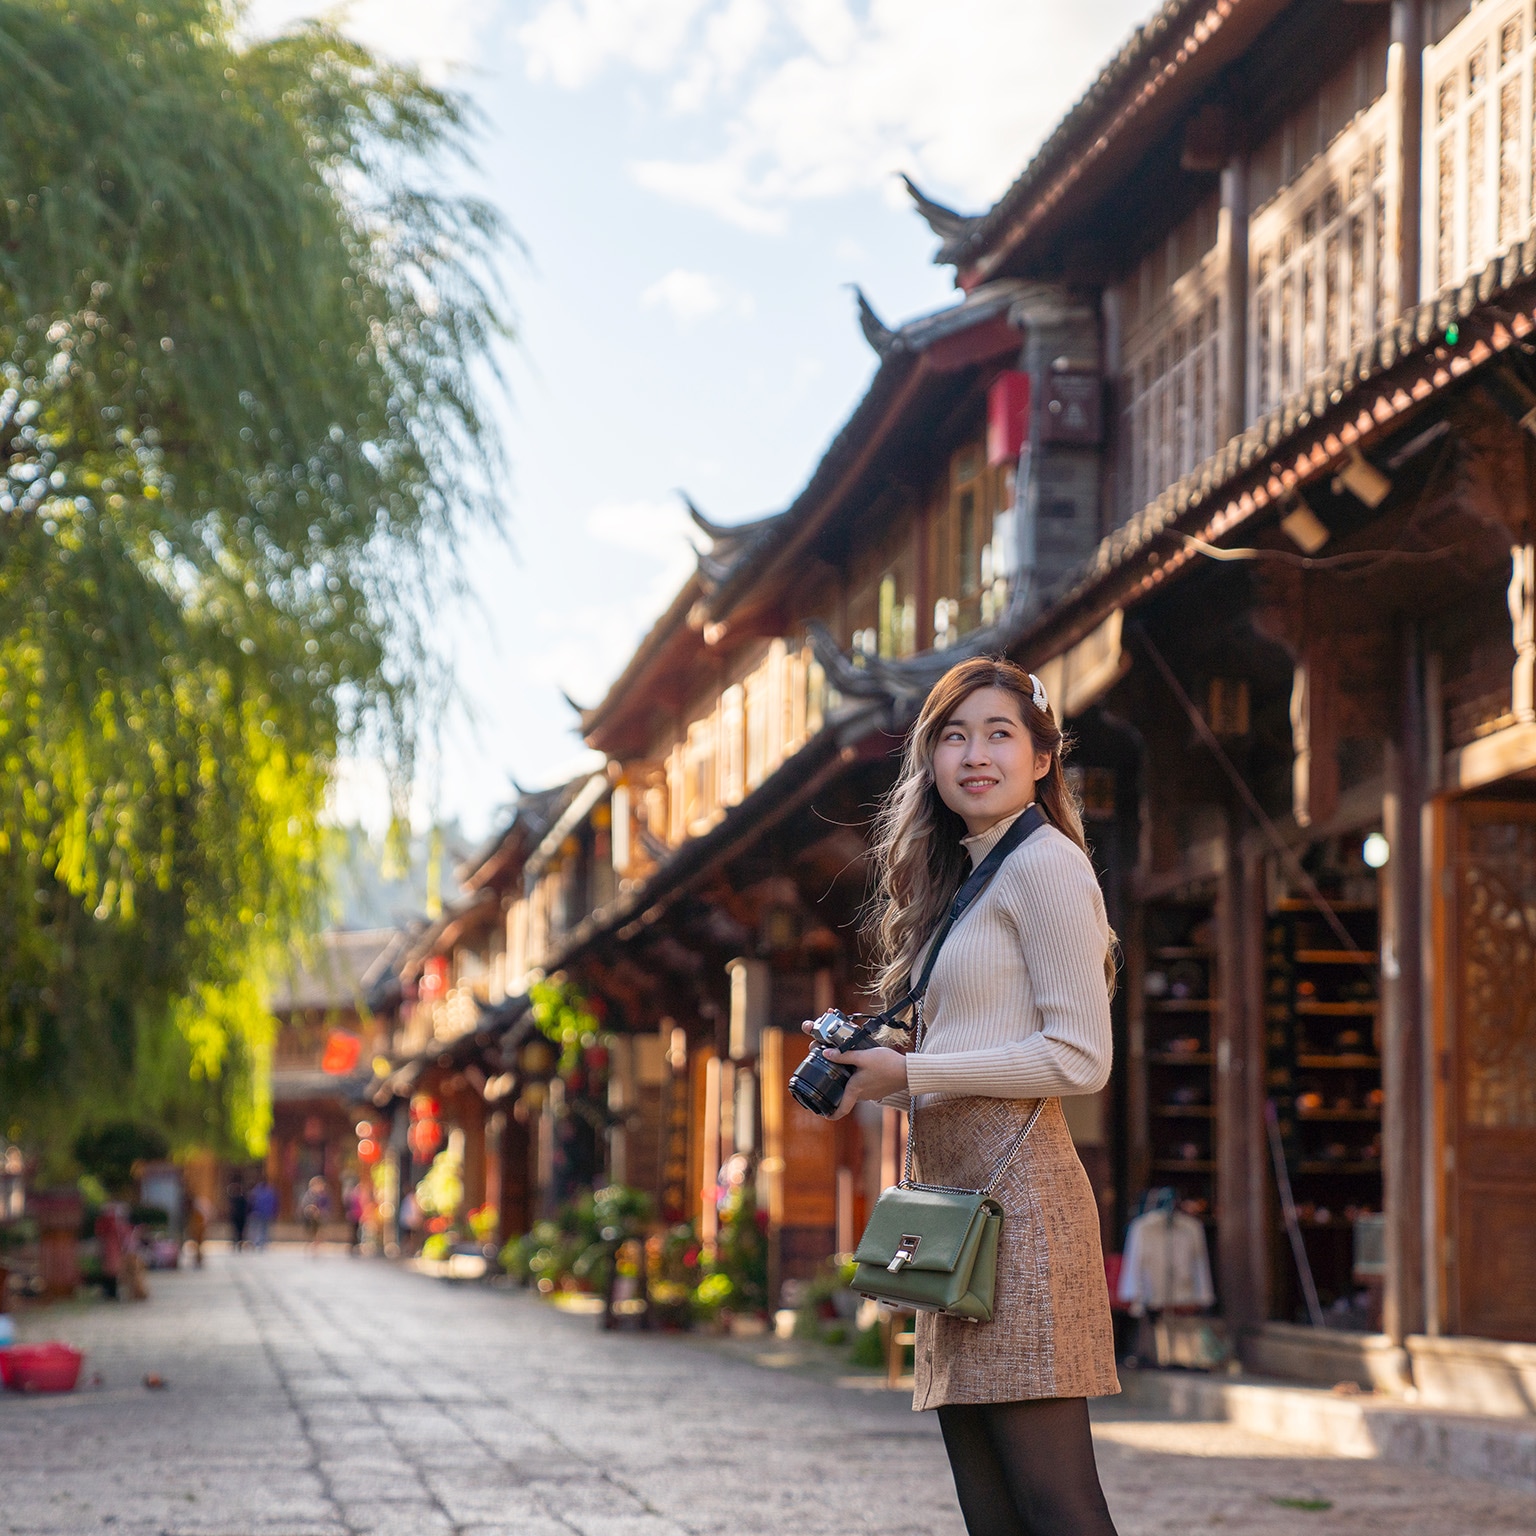 economic impact of tourism in china